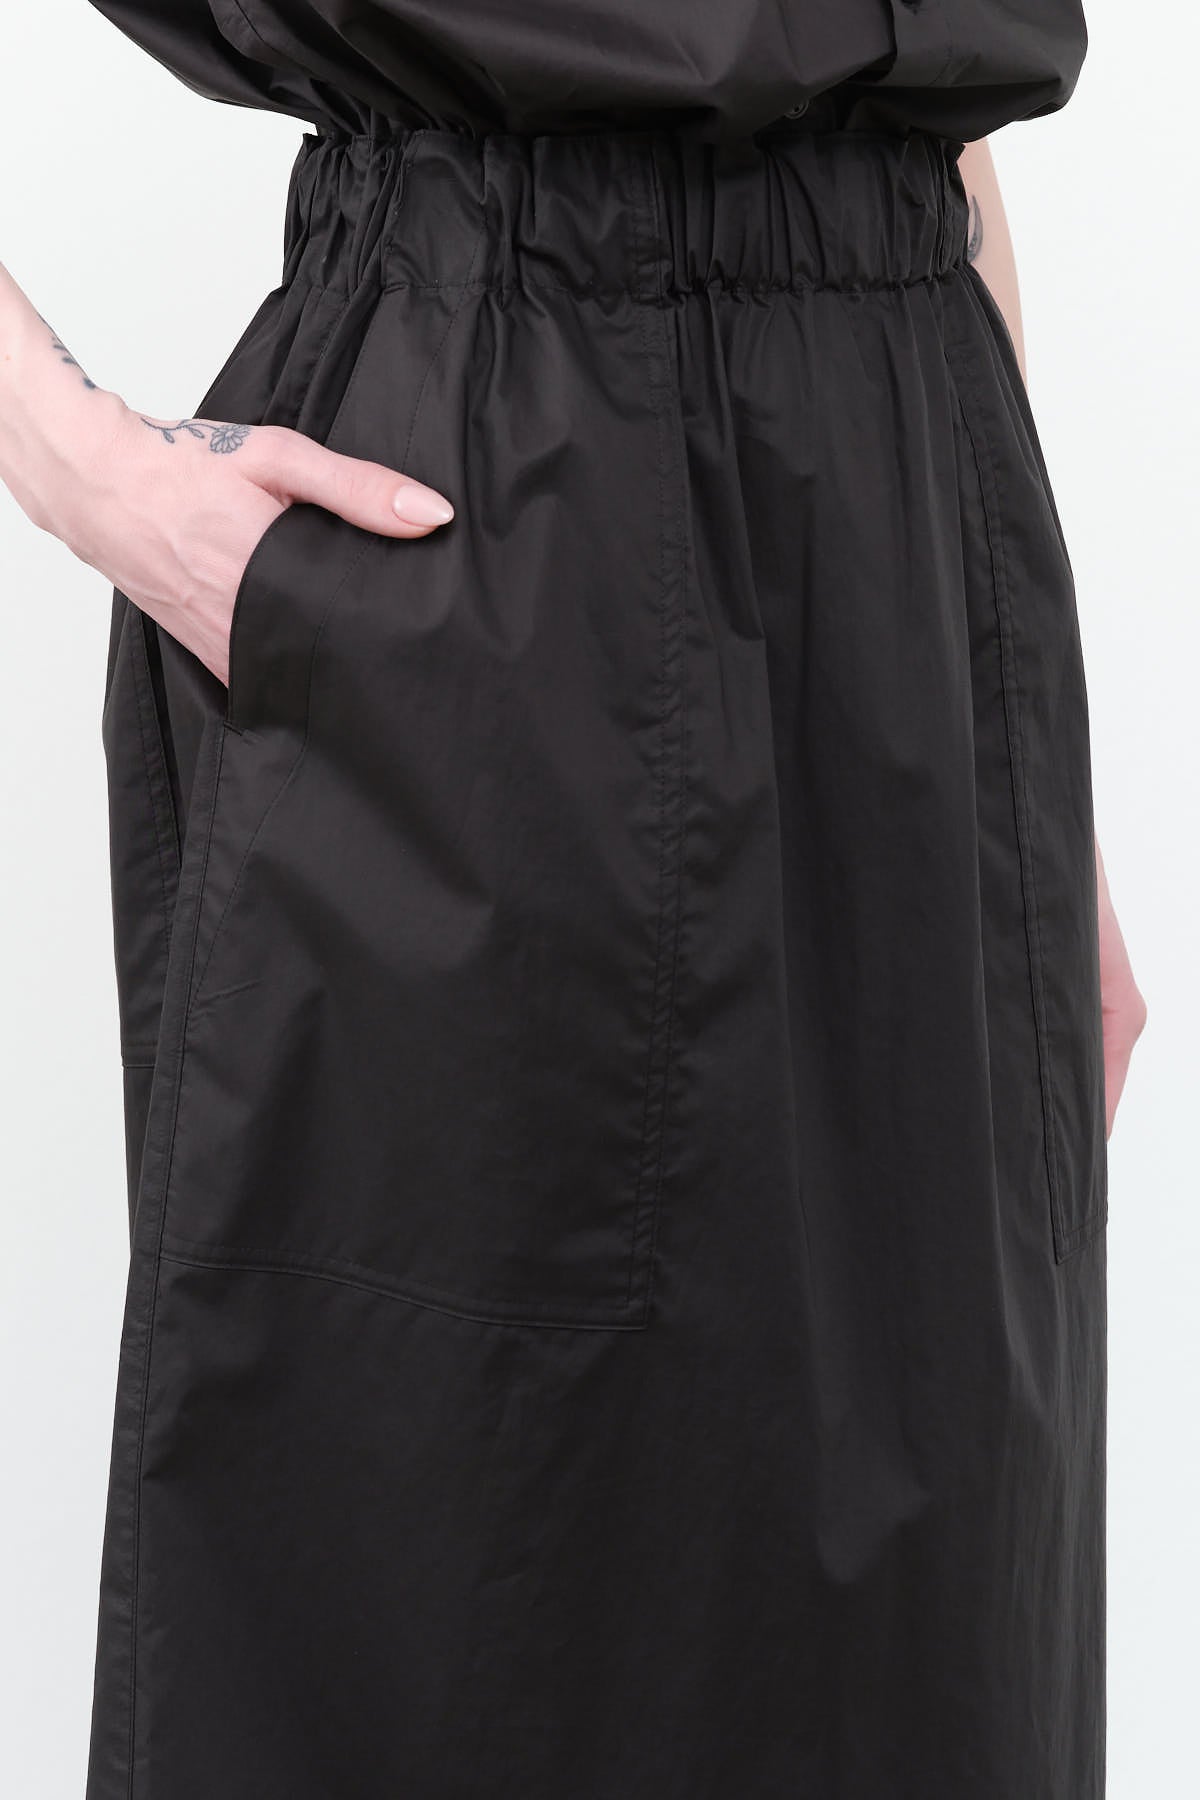 Pocket view of Cherry Skirt